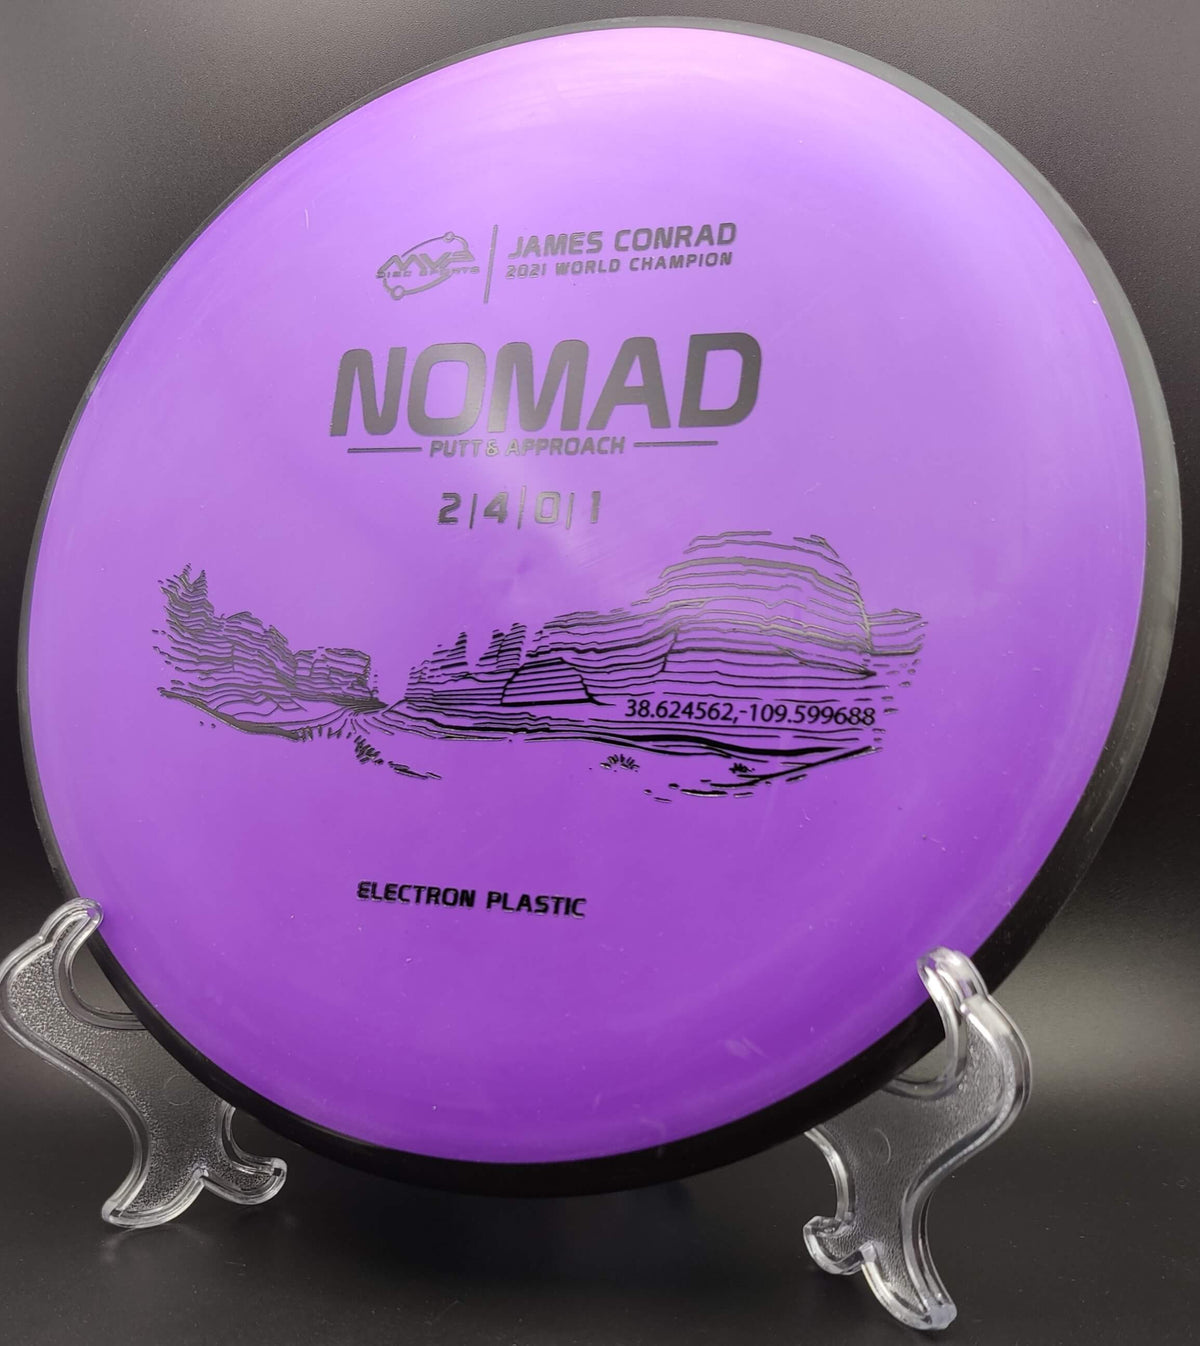 MVP Nomad - Electron Medium - James Conrad 2021 World Champion